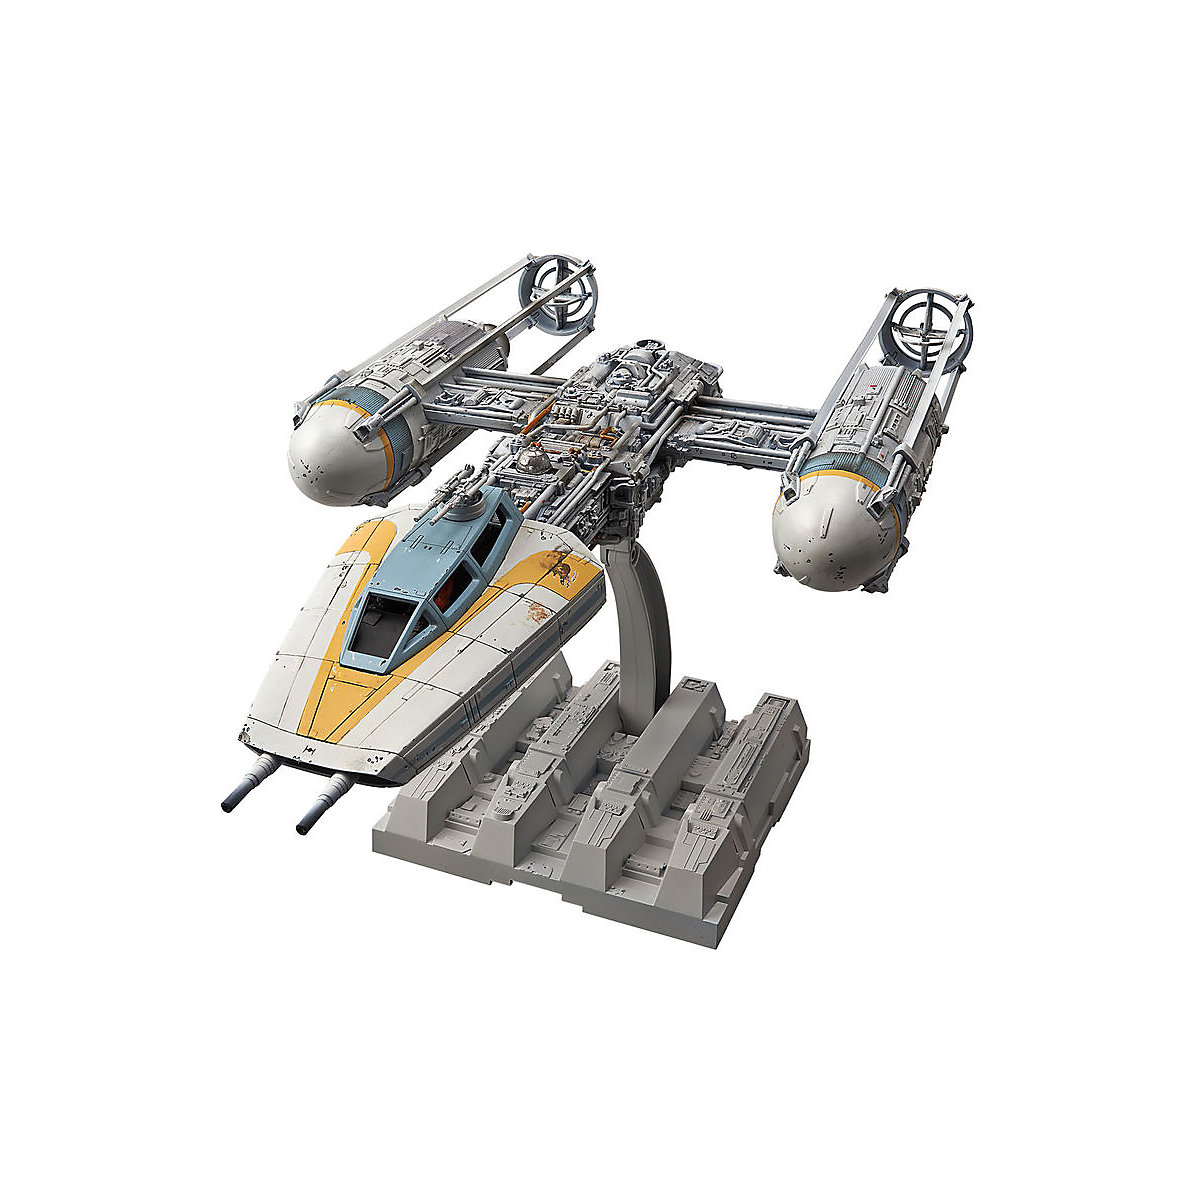 Y-Wing Starfighter Bandai Modellbausatz Star Wars im Maßstab 1:72 89 Teile 22 6 cm